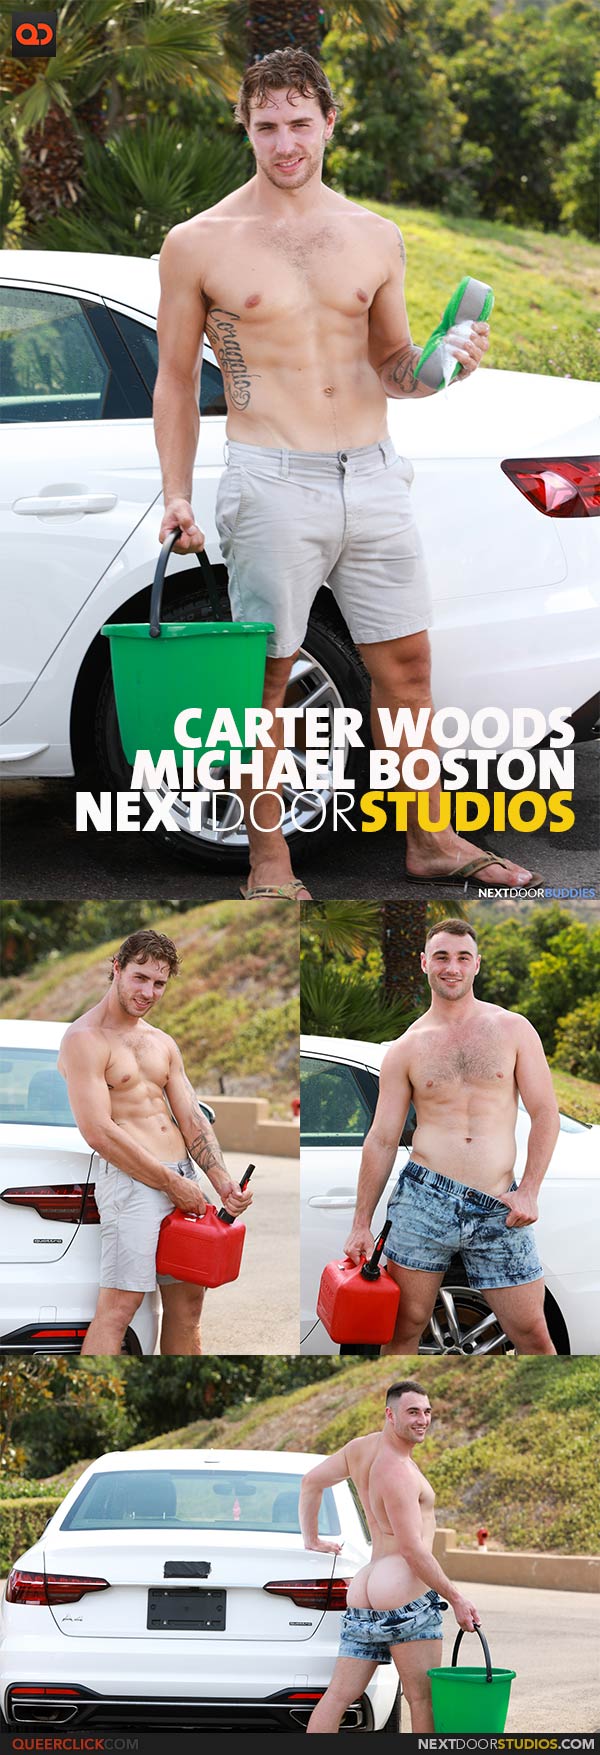 NextDoorStudios: Carter Woods and Michael Boston